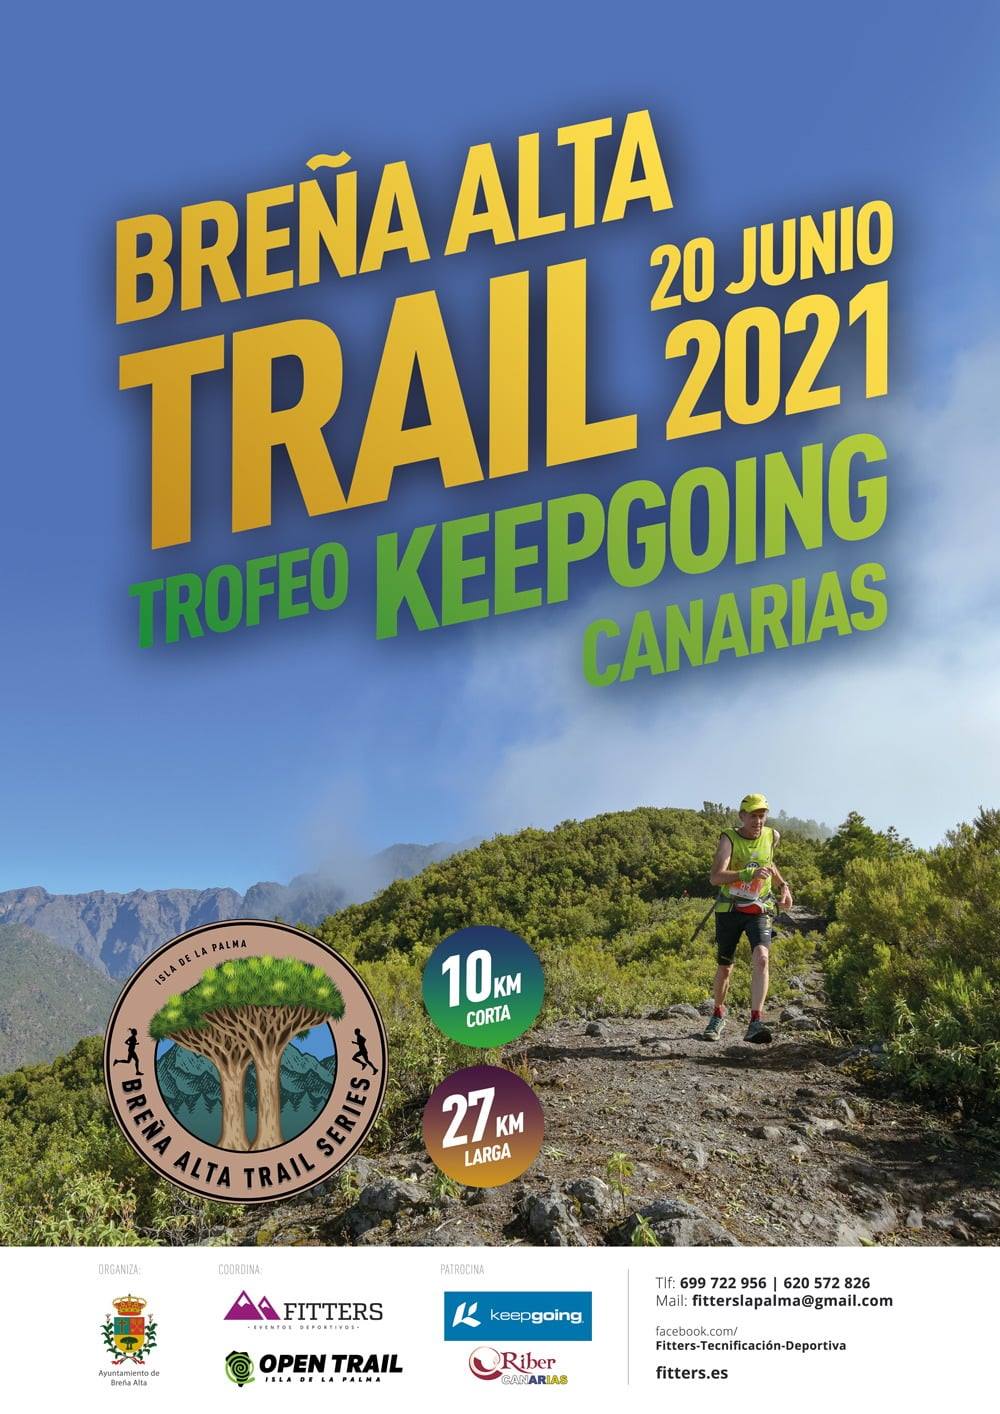 20-06-2021-brena-alta-trail-trofeo-keepgoing-canarias-la-palma